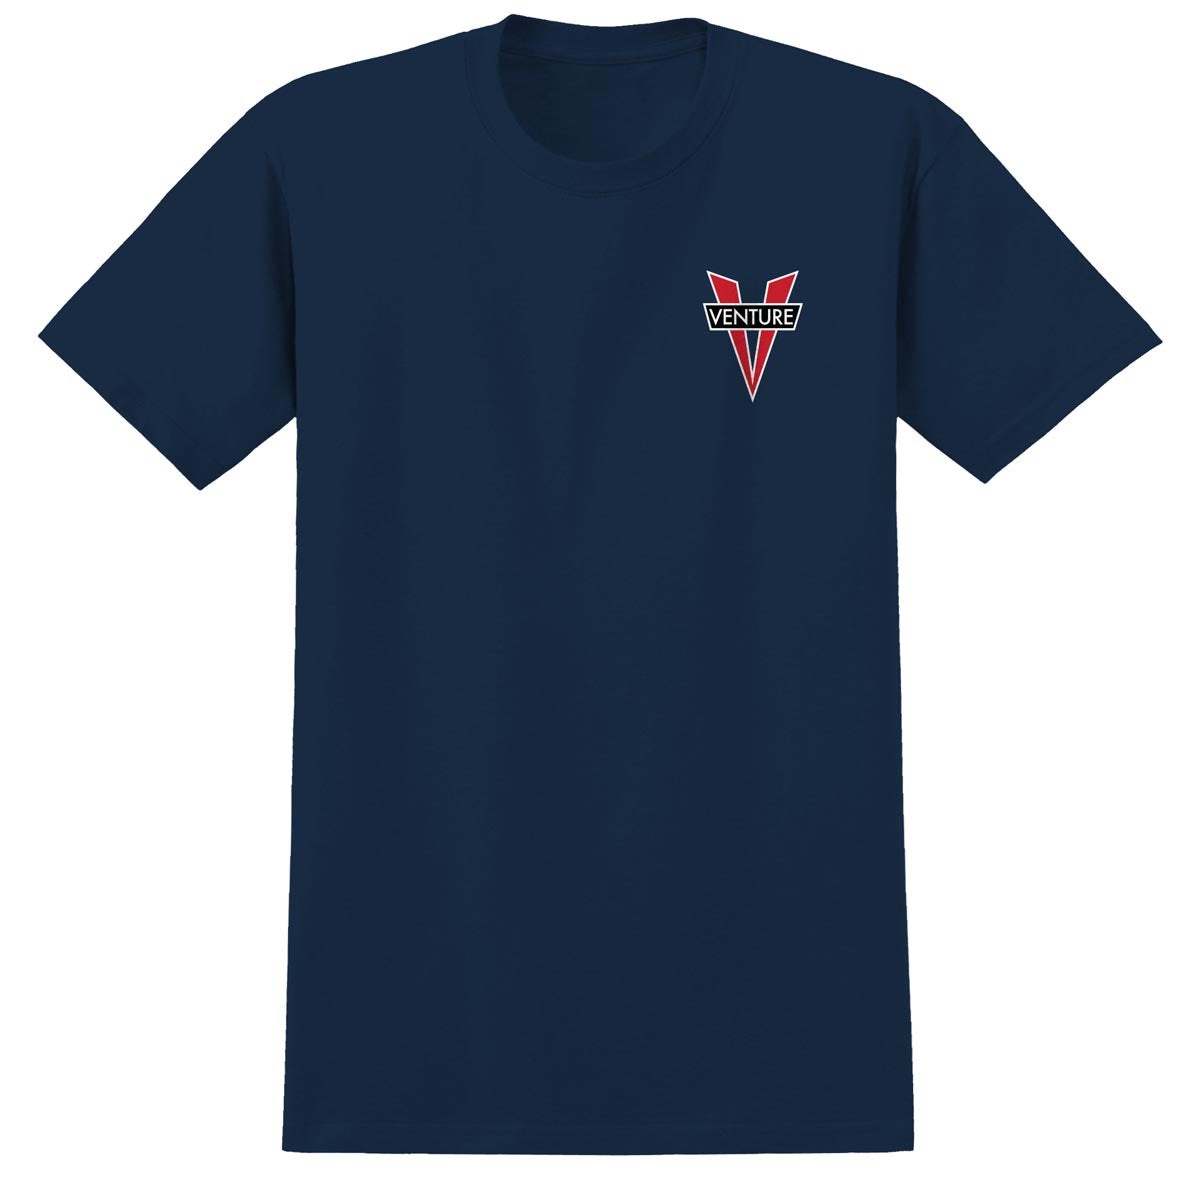 Venture Heritage T-Shirt - Navy/Red/Black/White image 1